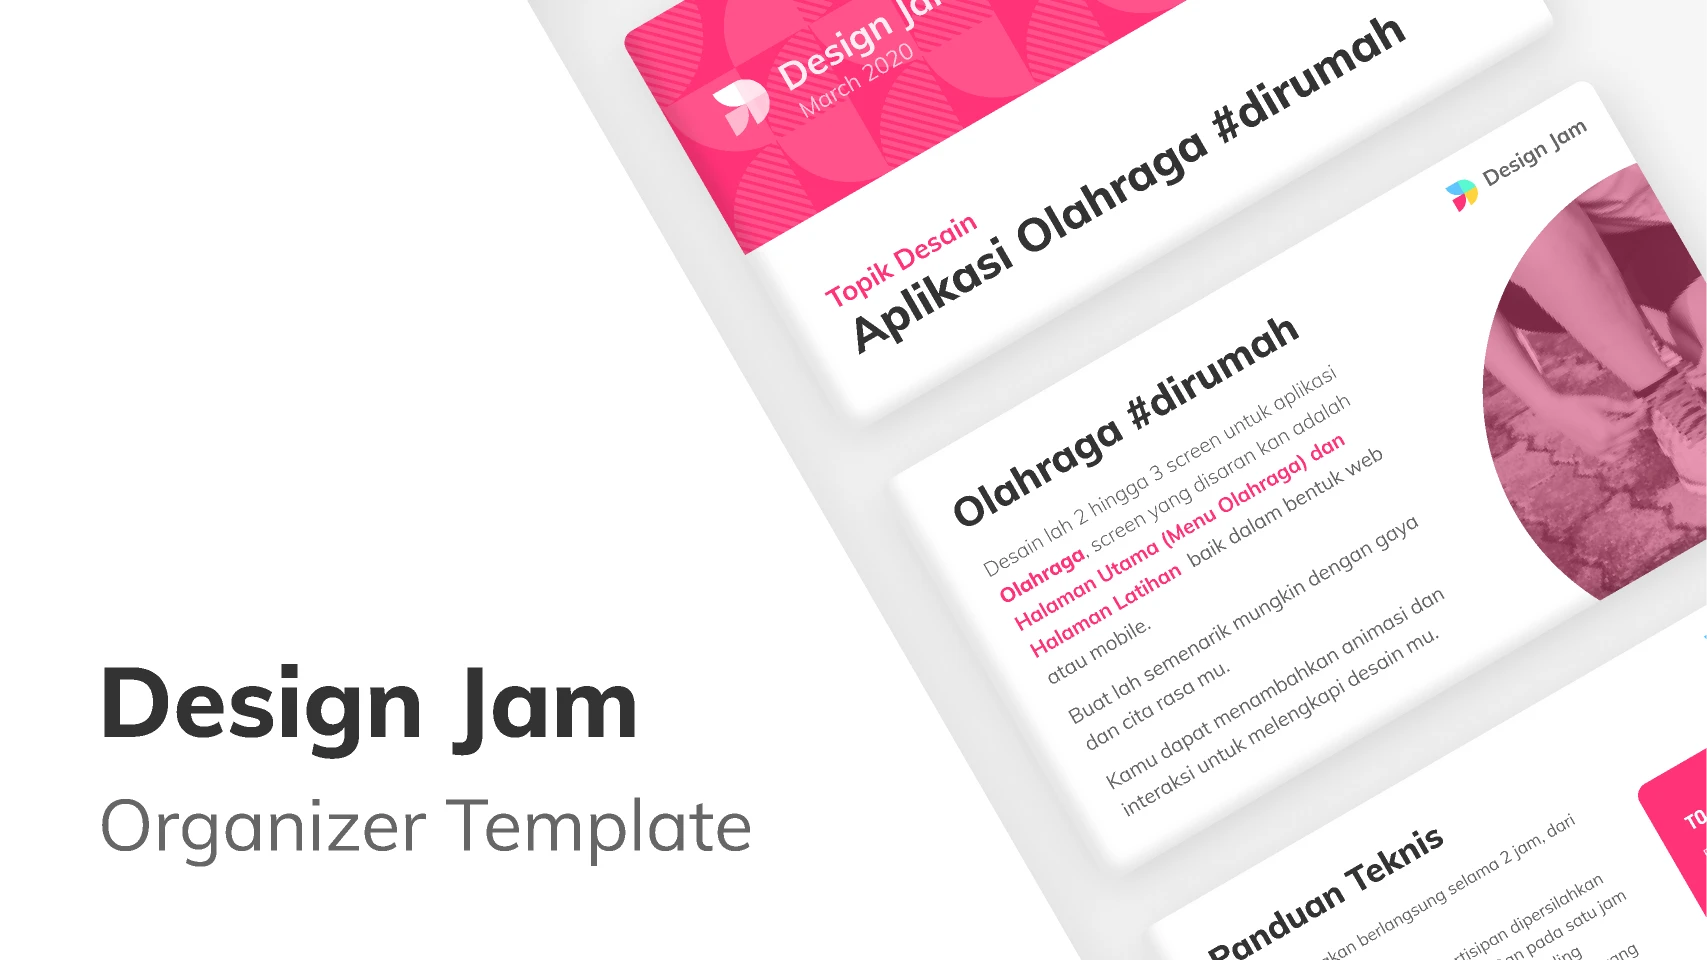 Design Jam - Organizer Template by @designjam.id for Figma and Adobe XD